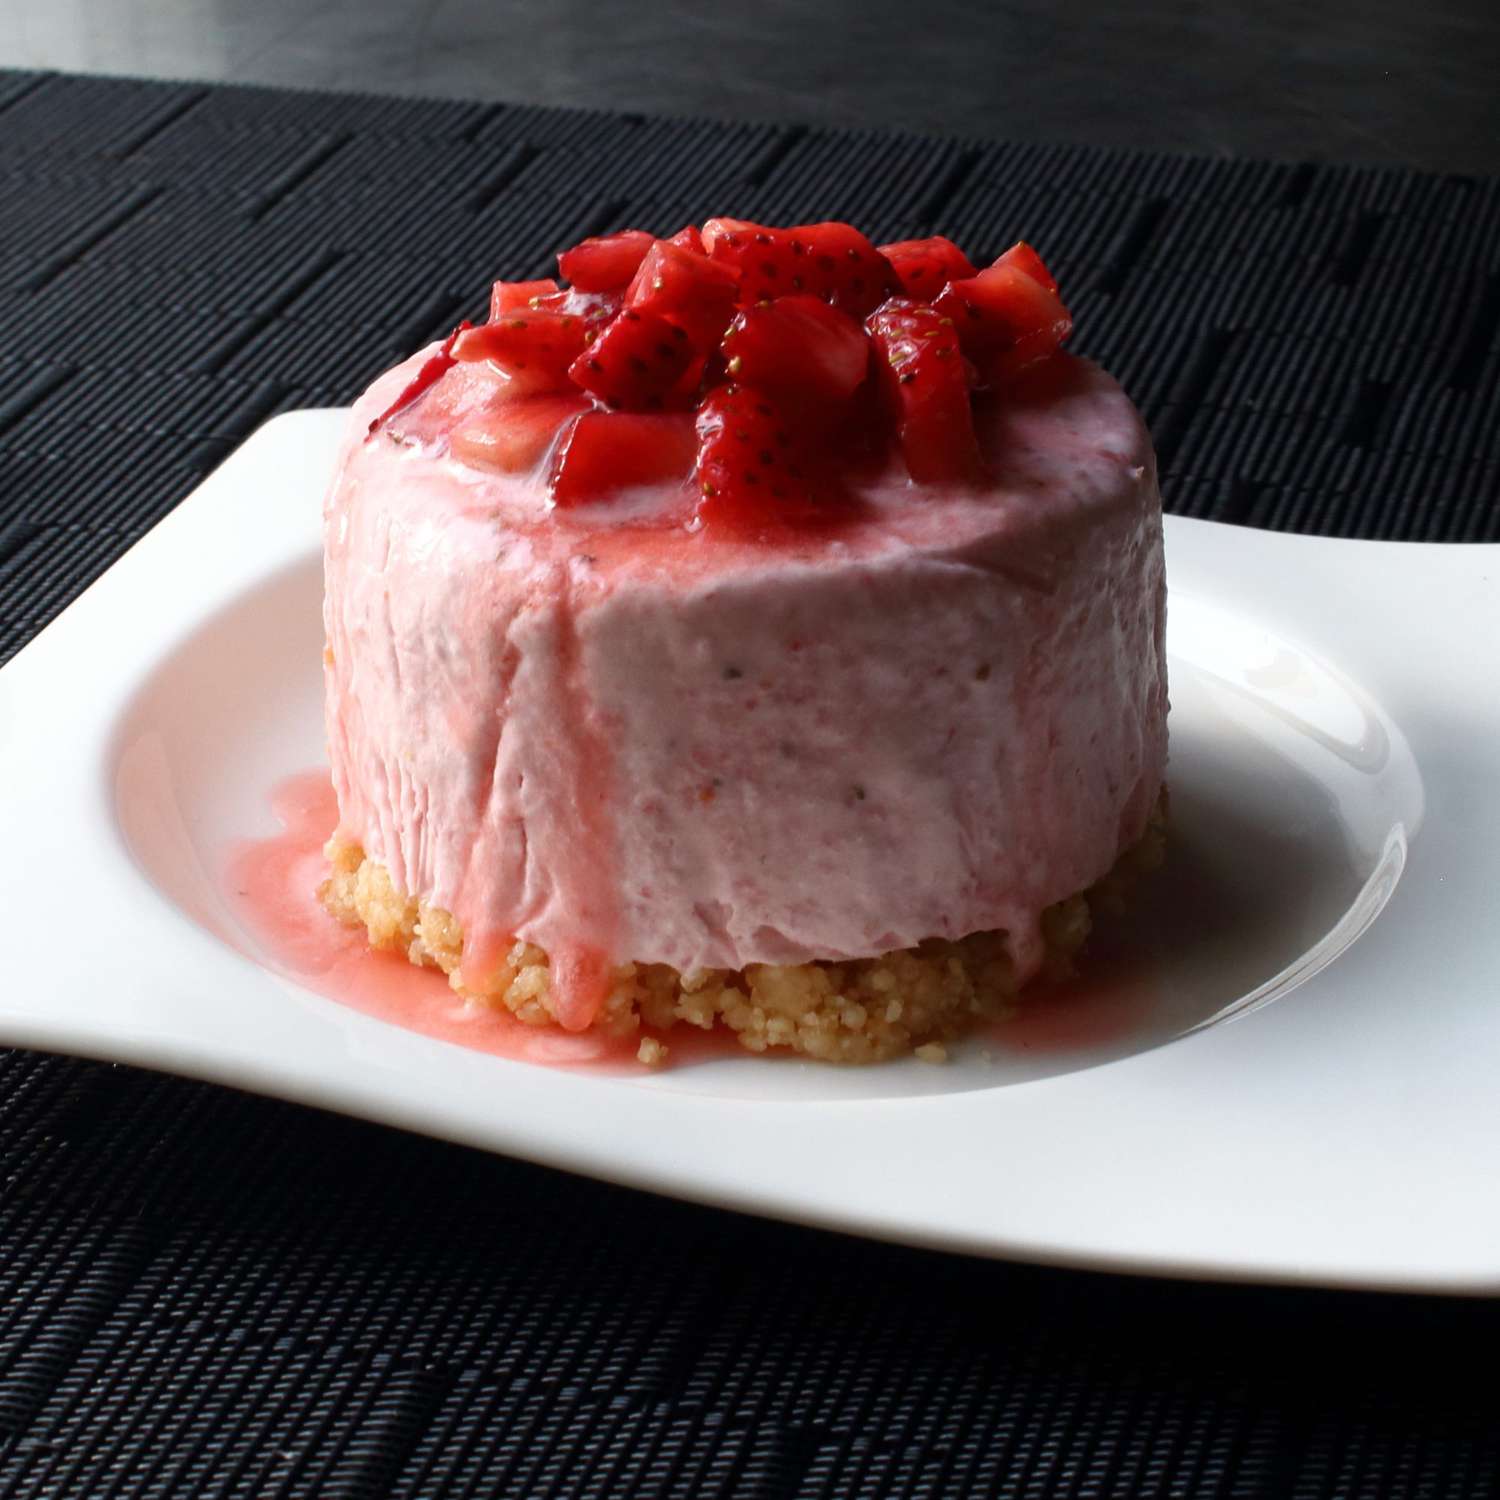 strawberry and yogurt dessert with strawberry topping